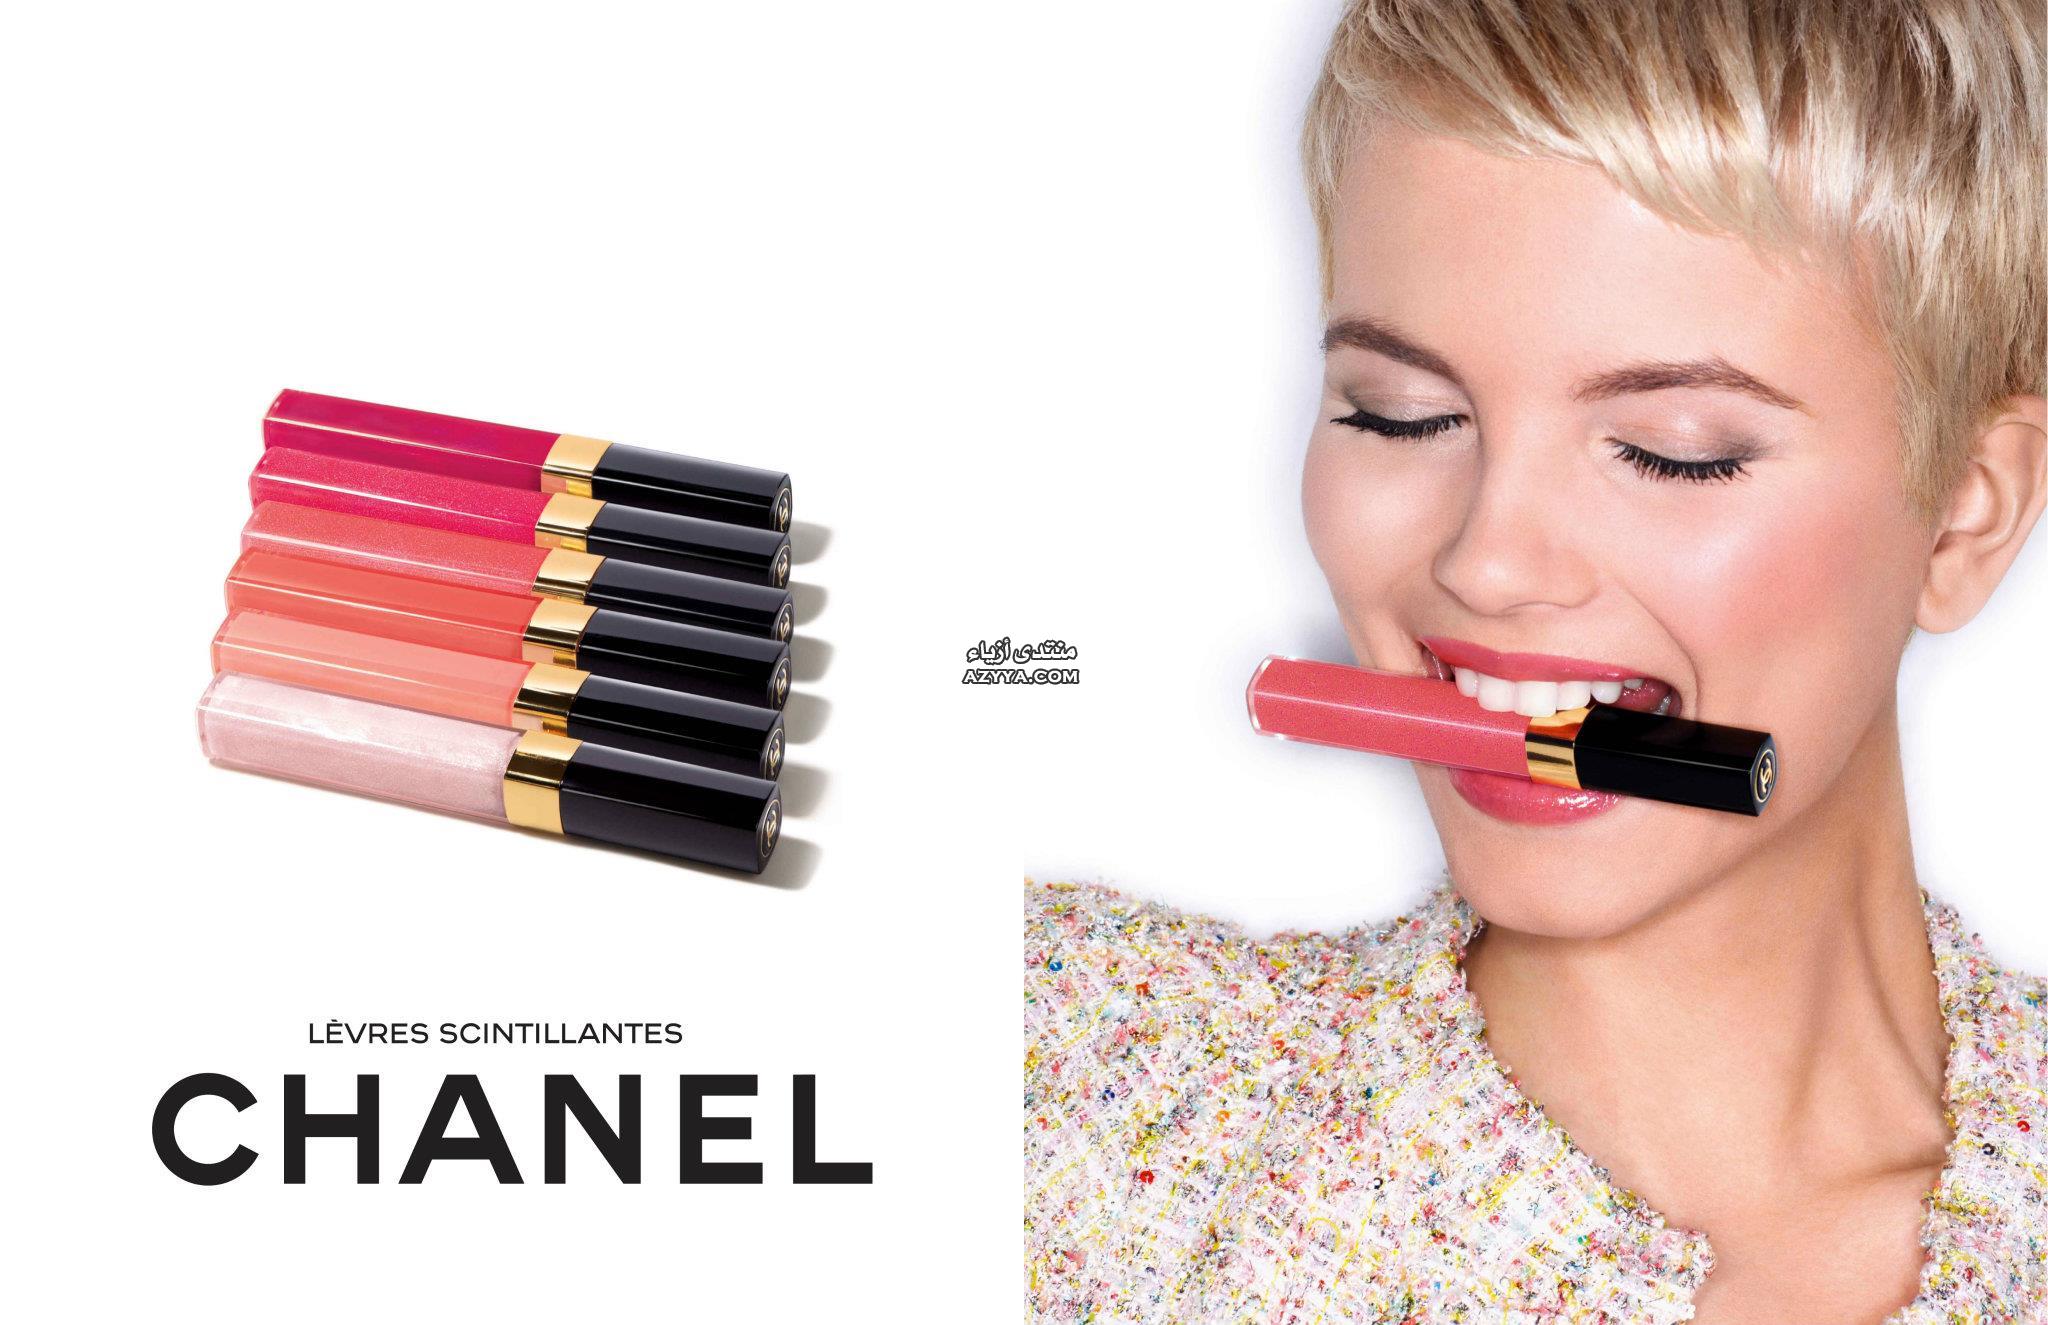   chanel       Chanel